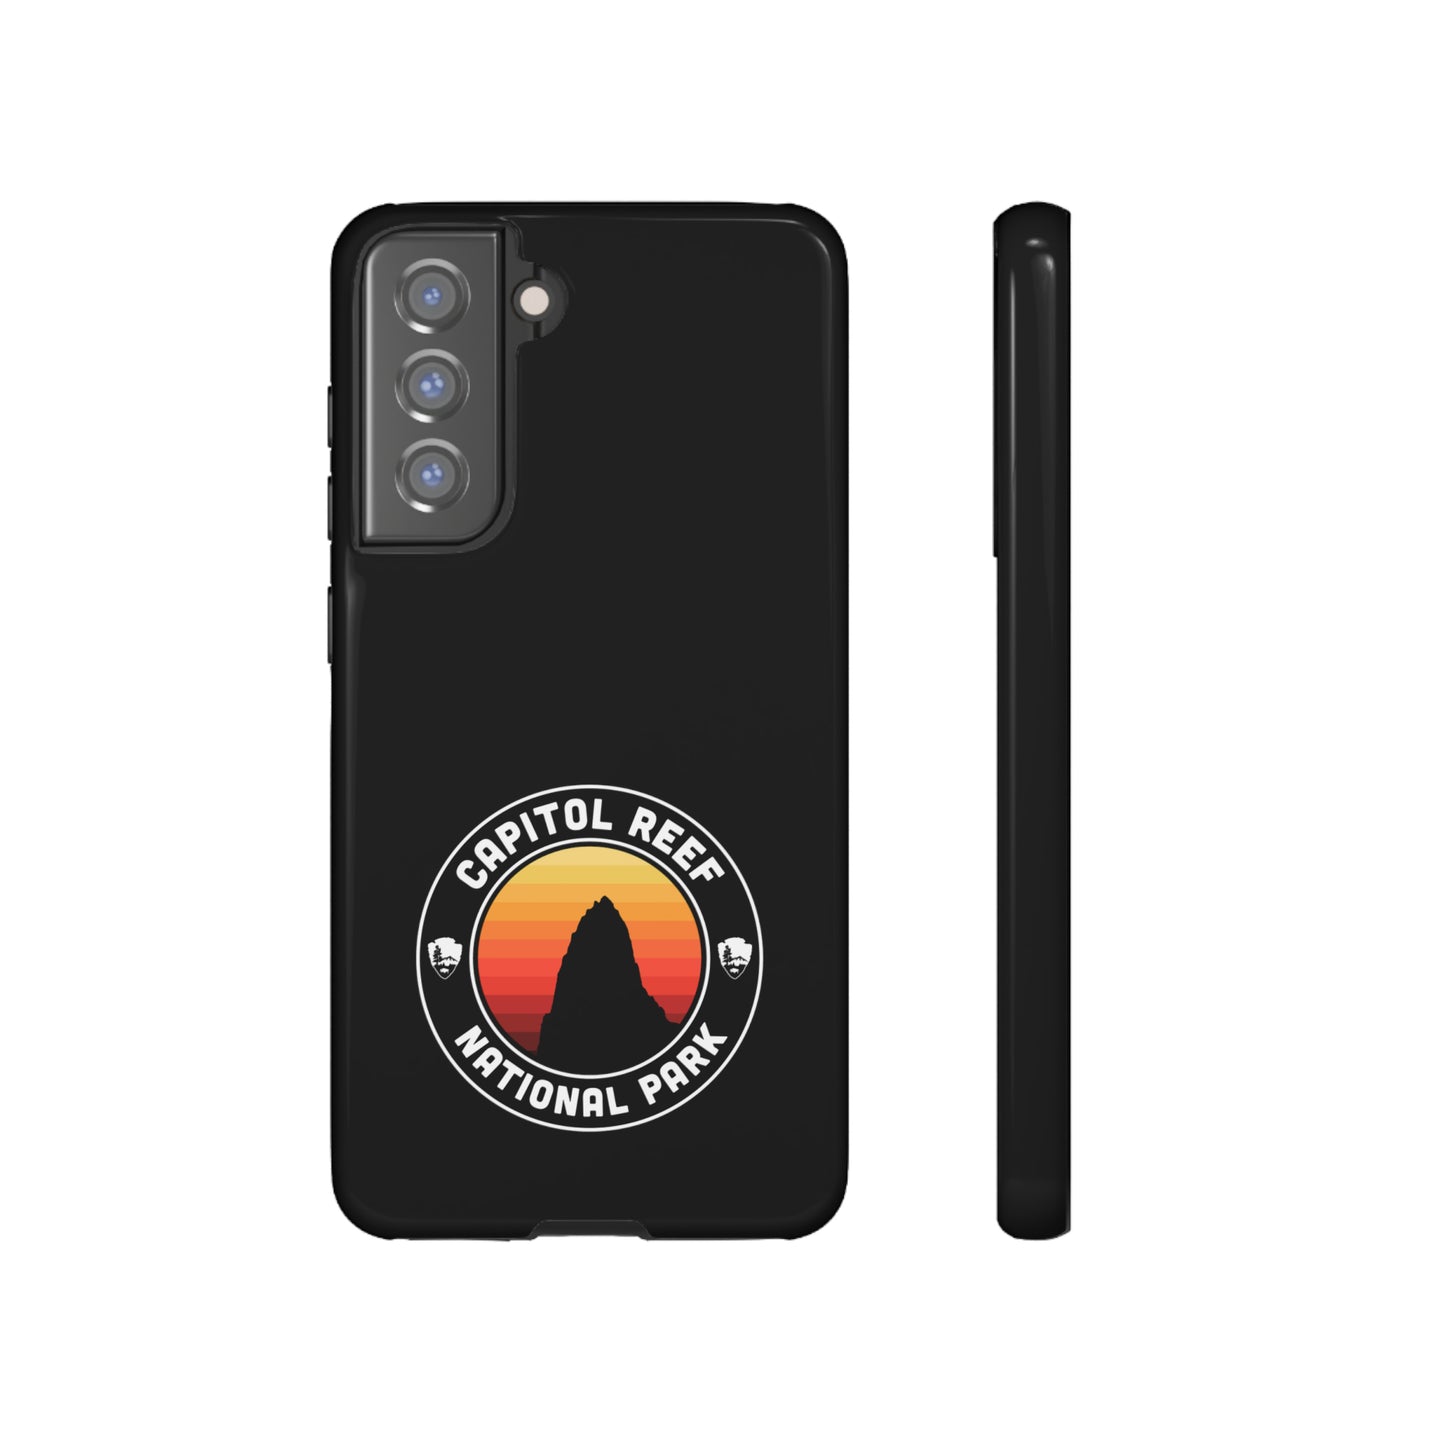 Capitol Reef National Park Phone Case - Round Emblem Design